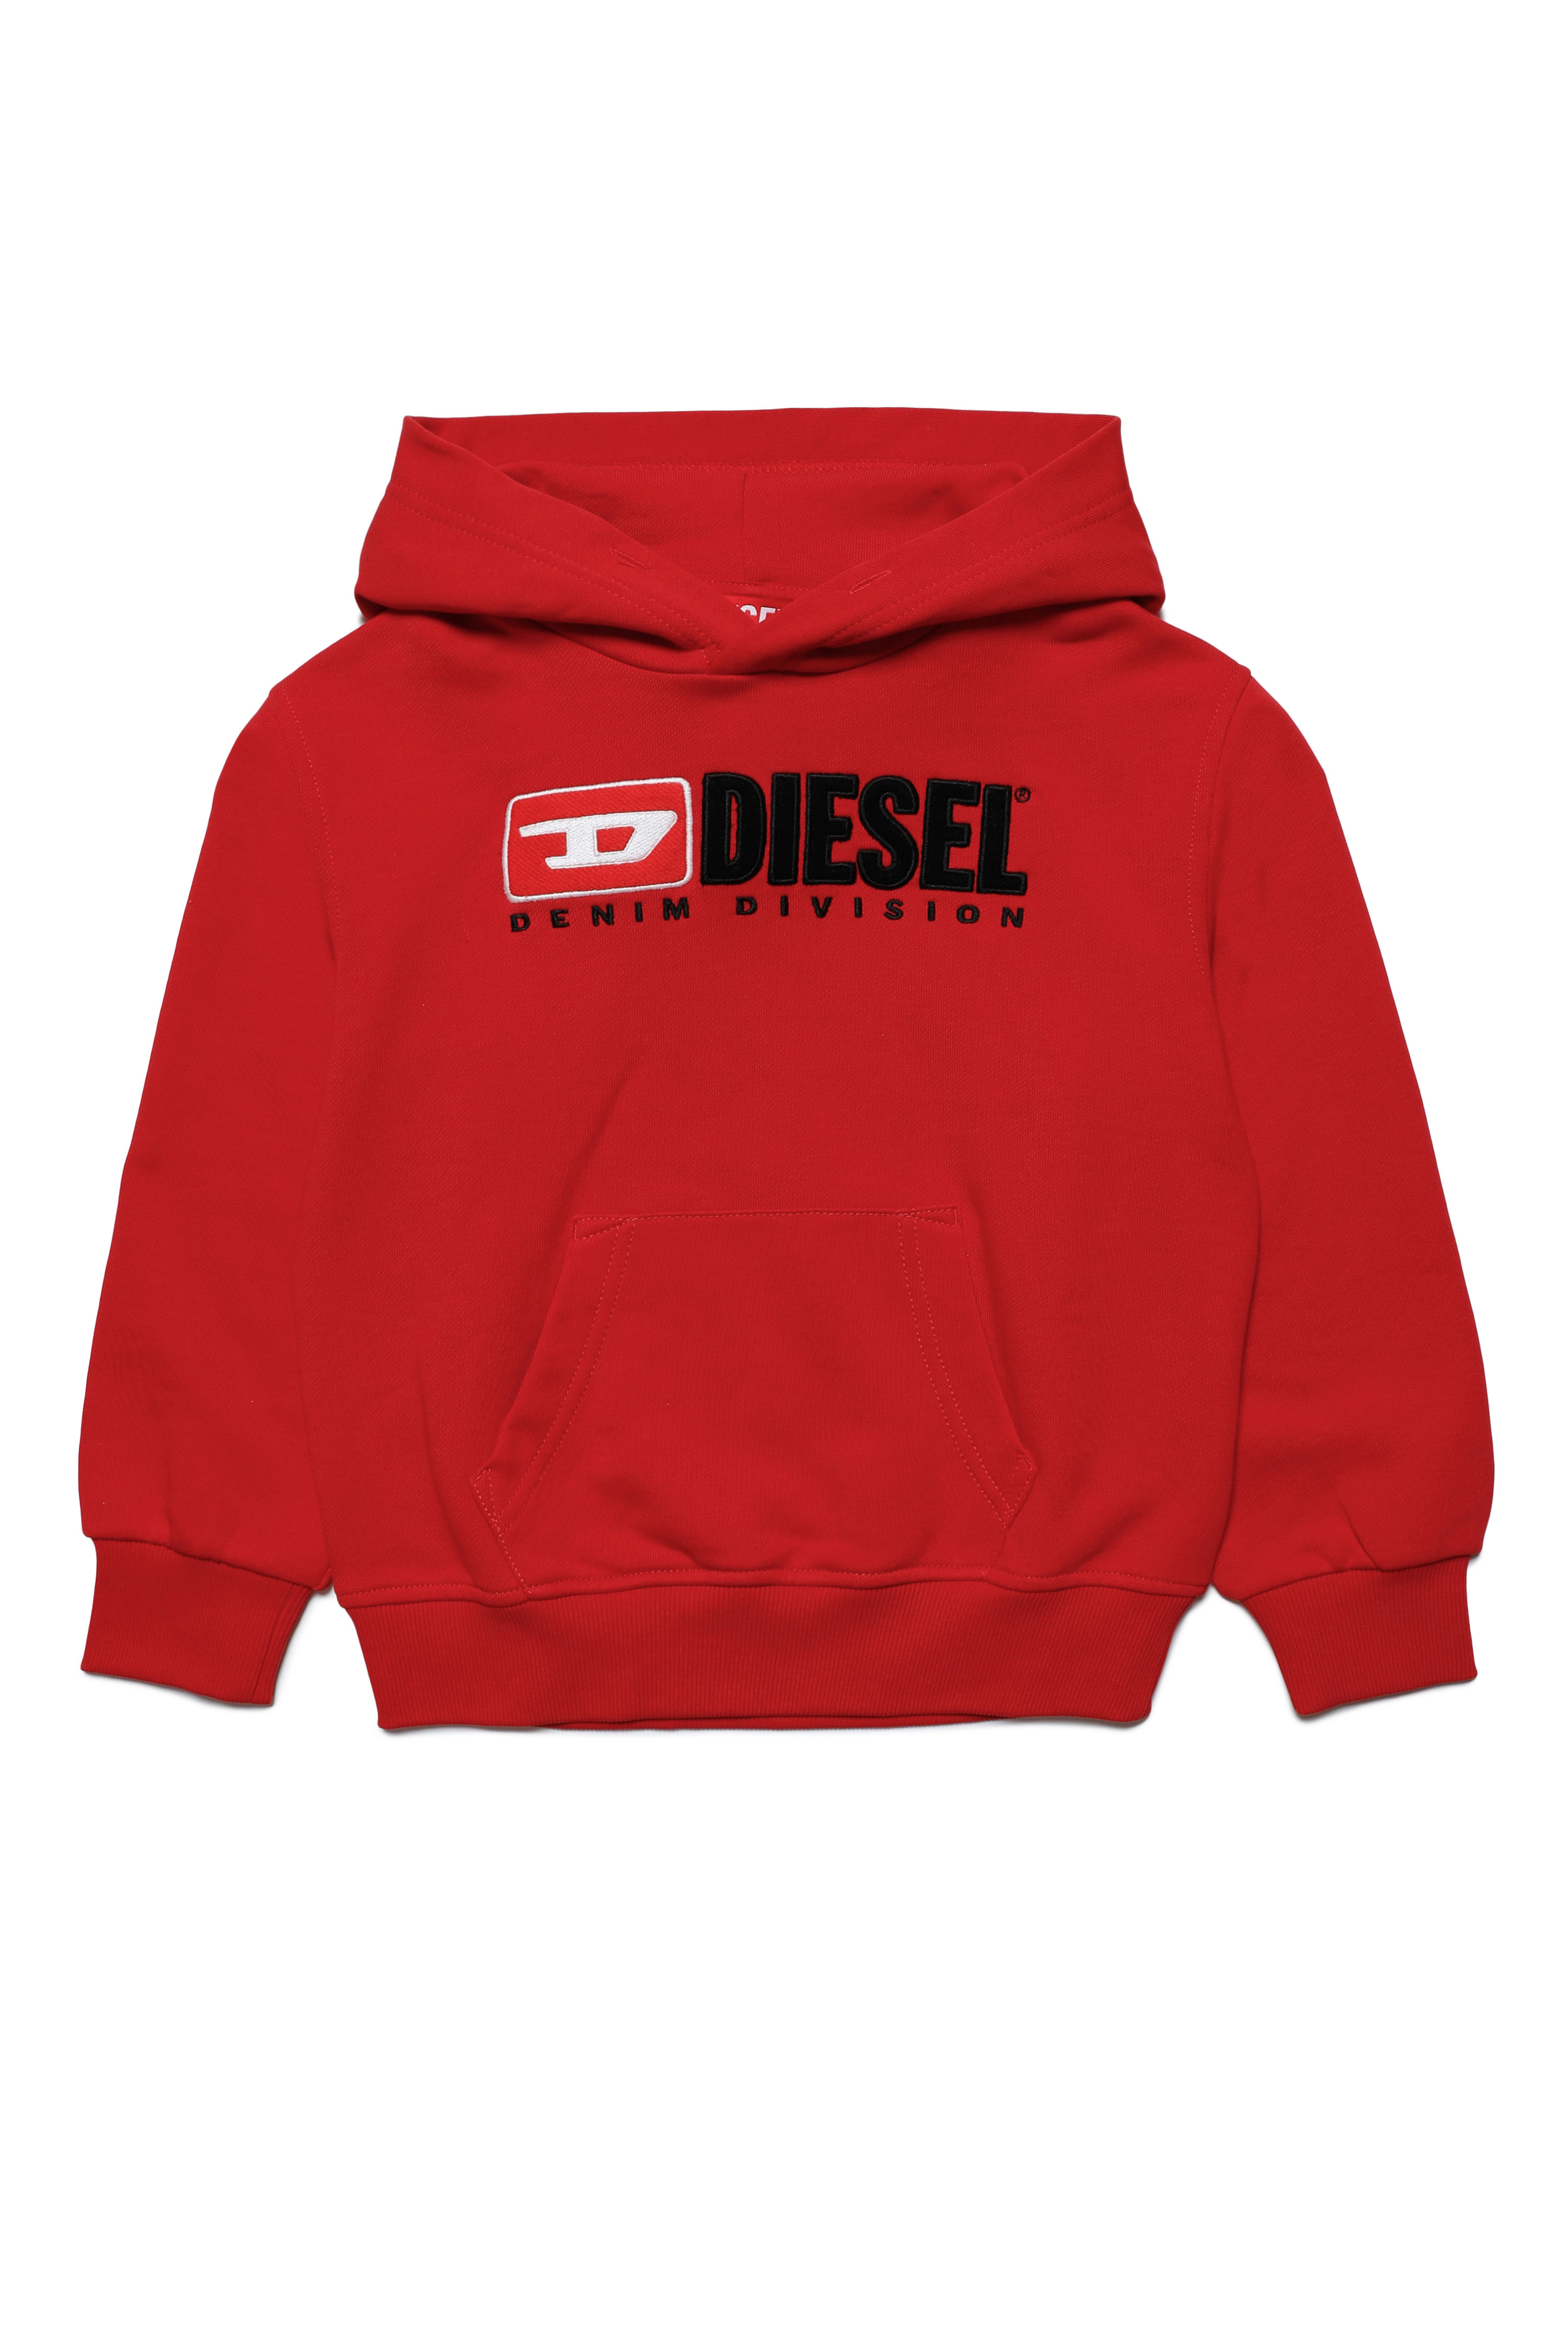 Diesel - SGINNDIVE OVER, Rouge - Image 1